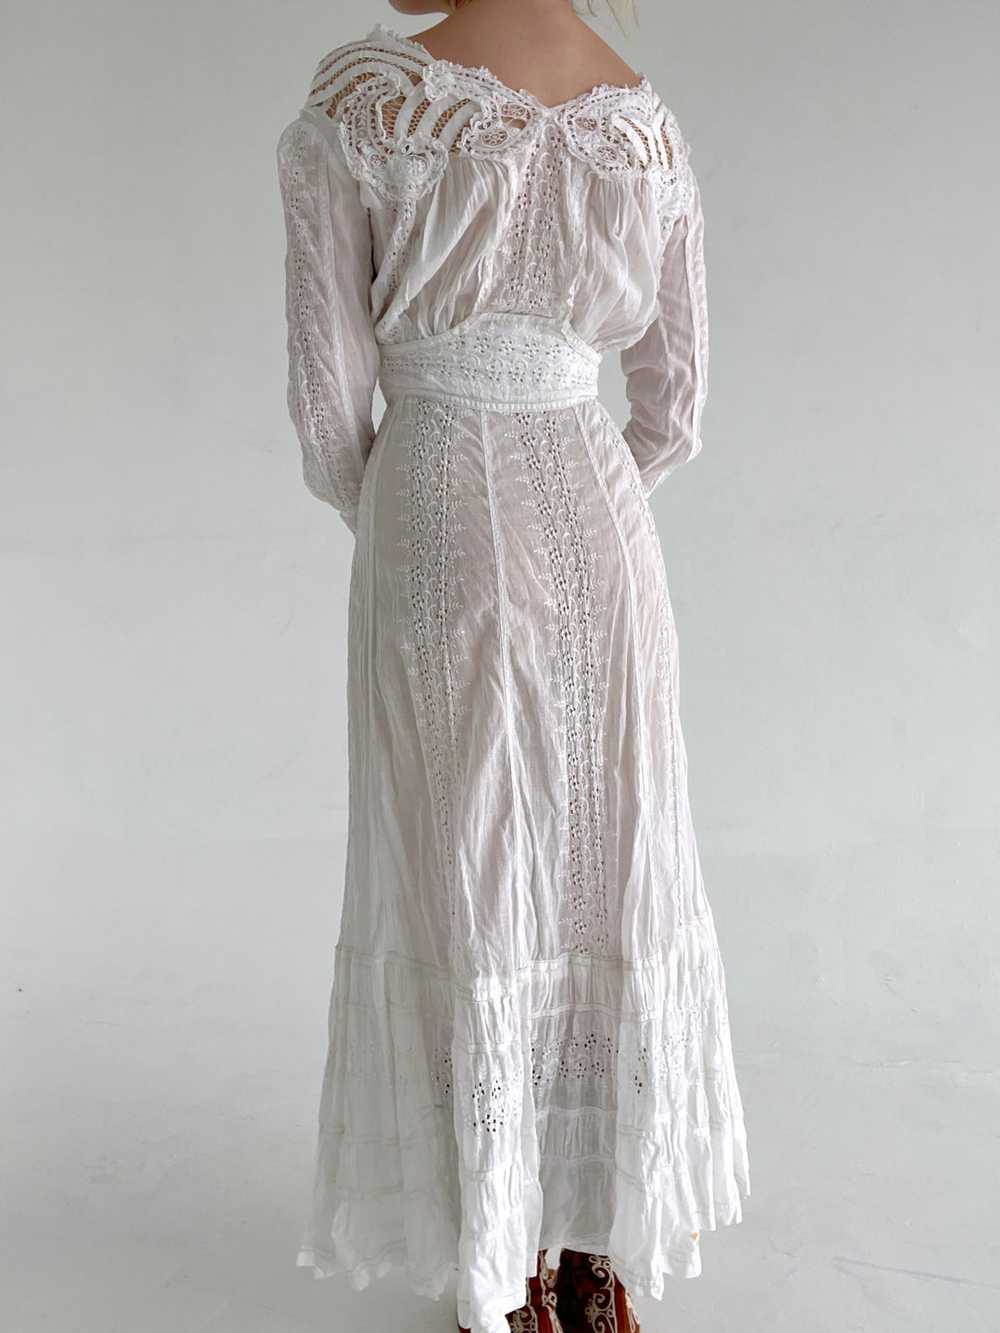 Victorian White Cotton Lawn Dress - image 1